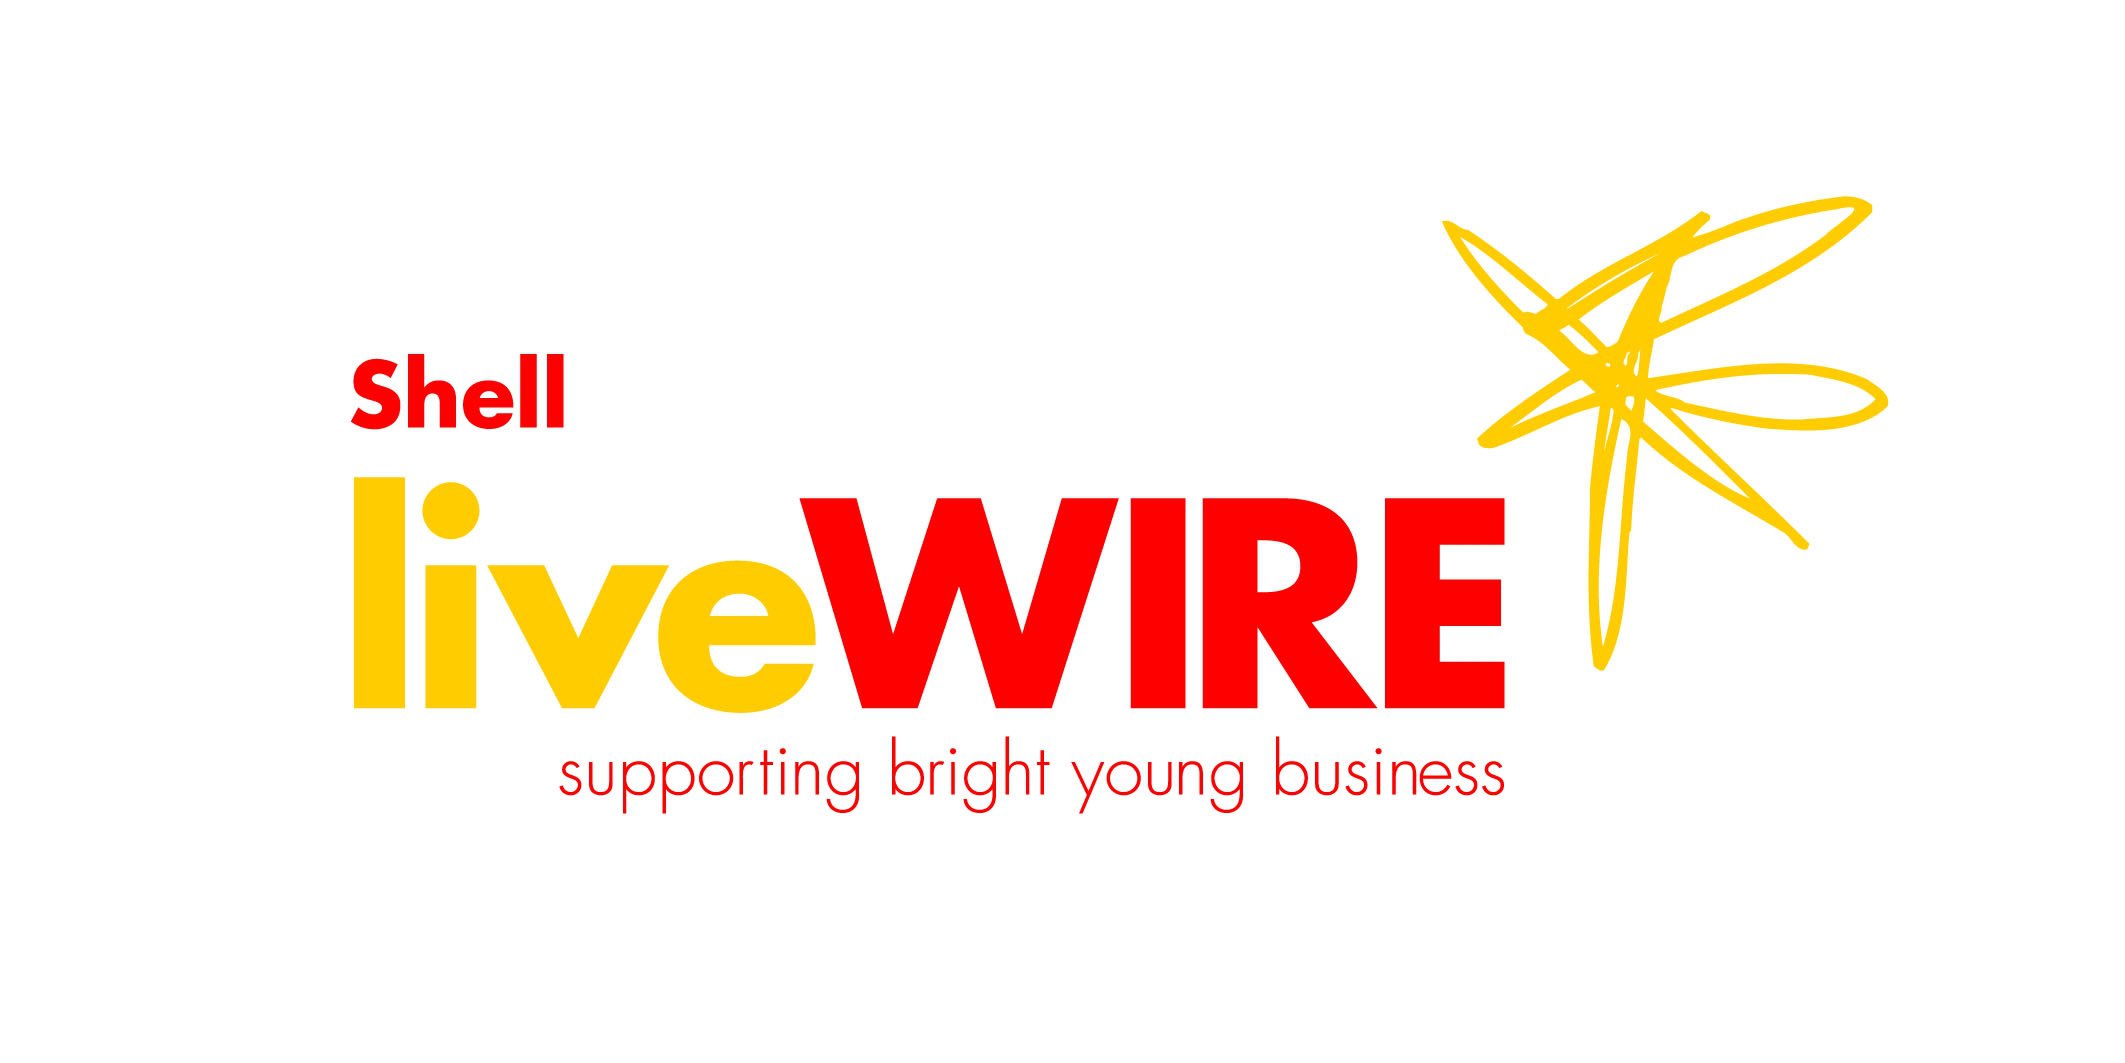 Shell Nigeria LiveWire: Giving Breath to Bright Ideas